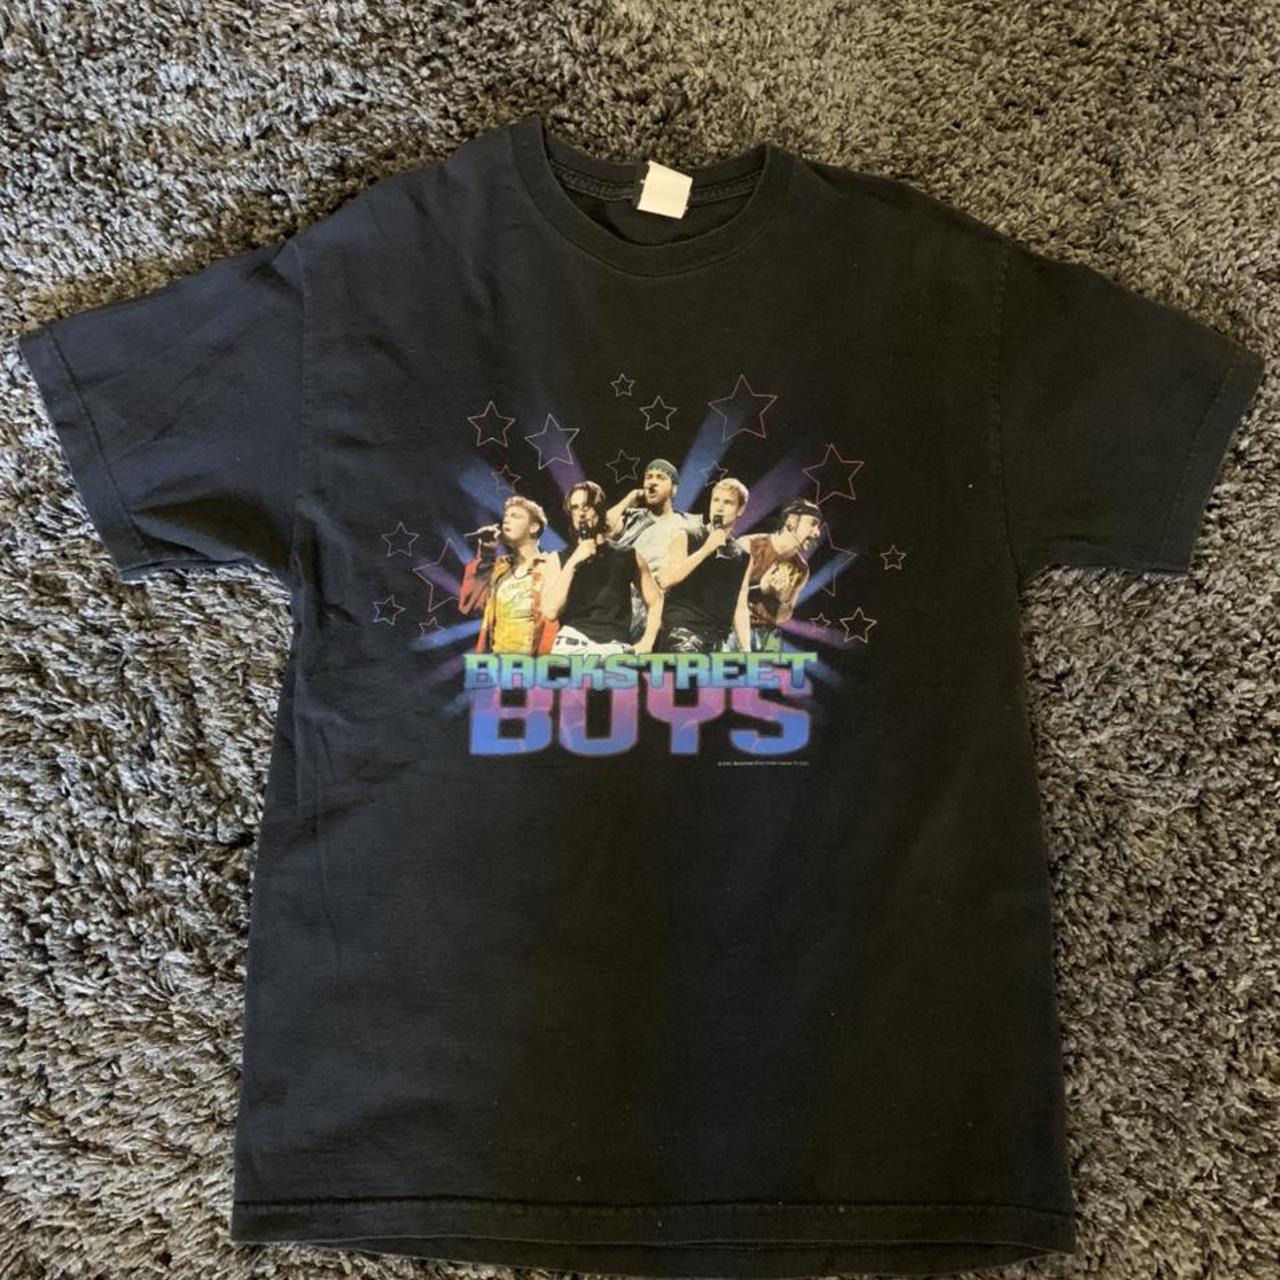 Vintage 2001 Backstreet Boys Tour shirt size large. - Depop